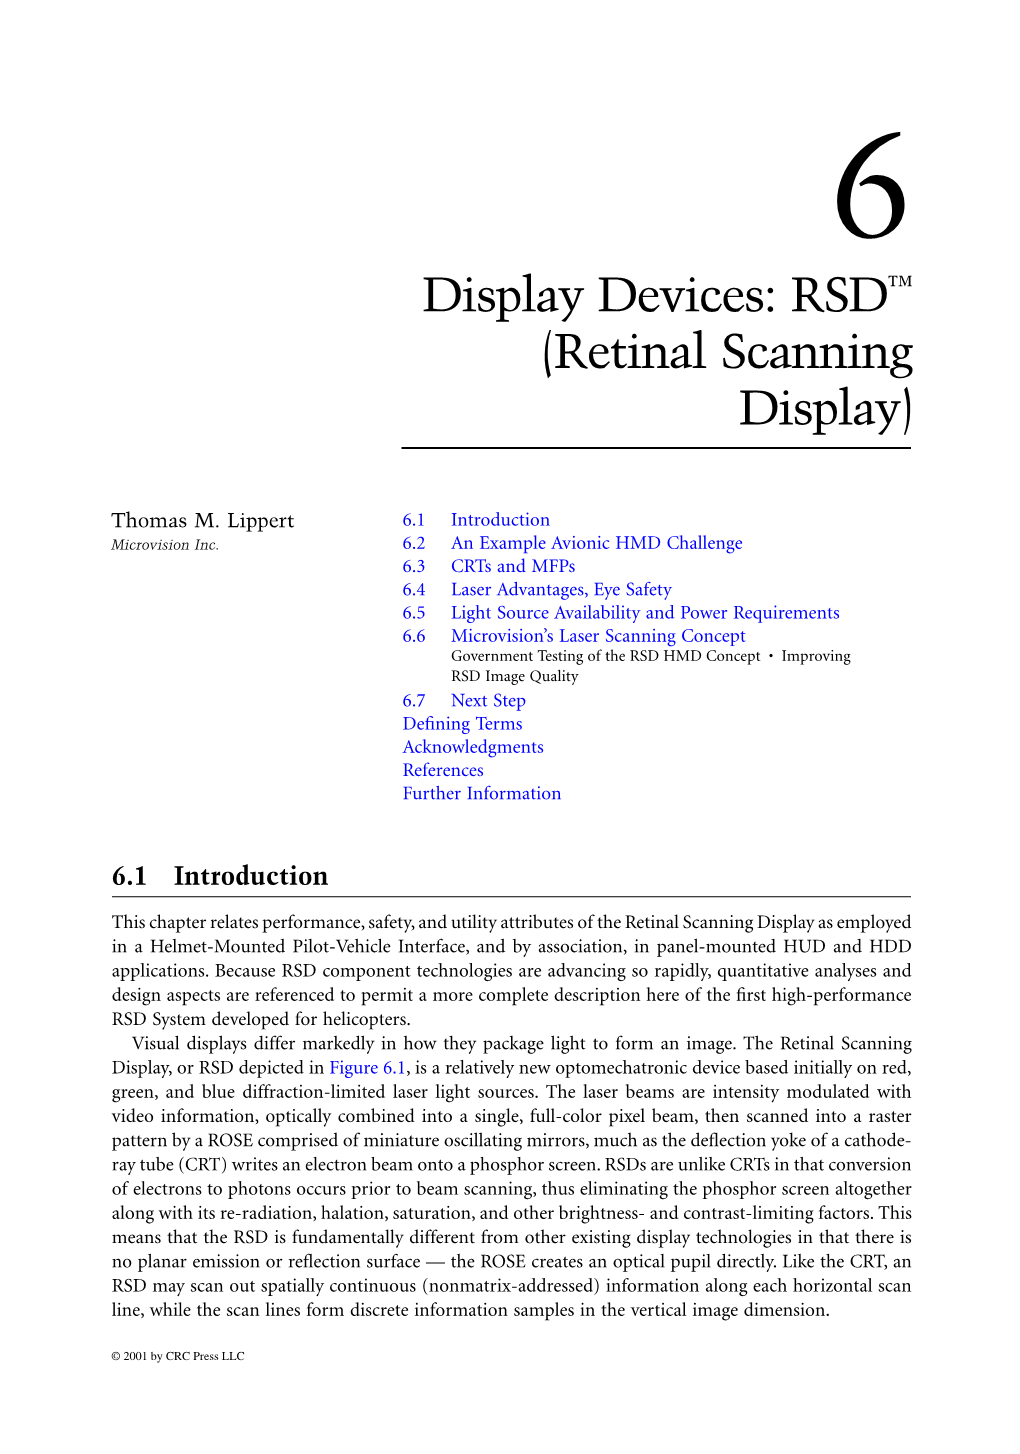 Display Devices: RSD™ (Retinal Scanning Display)